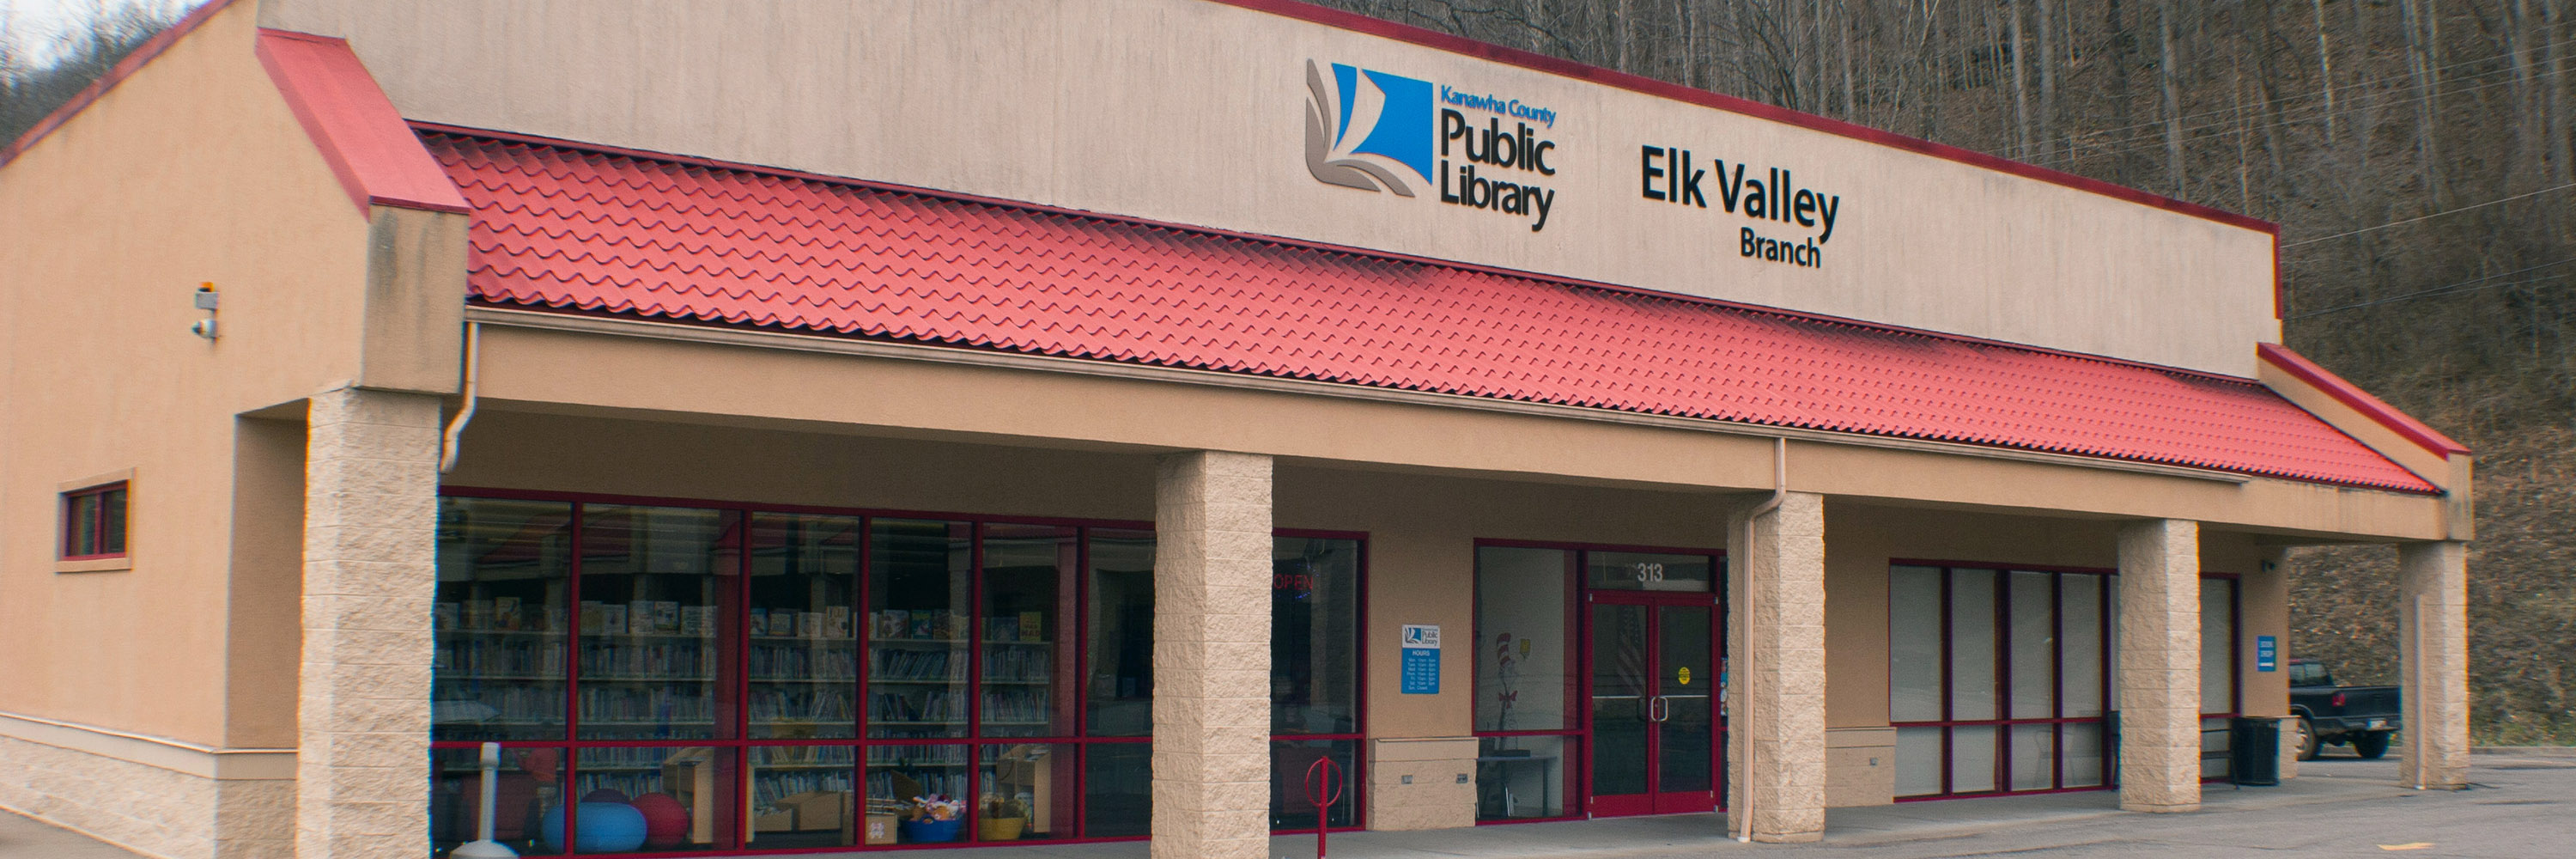 Elk Valley Branch Library Exterior